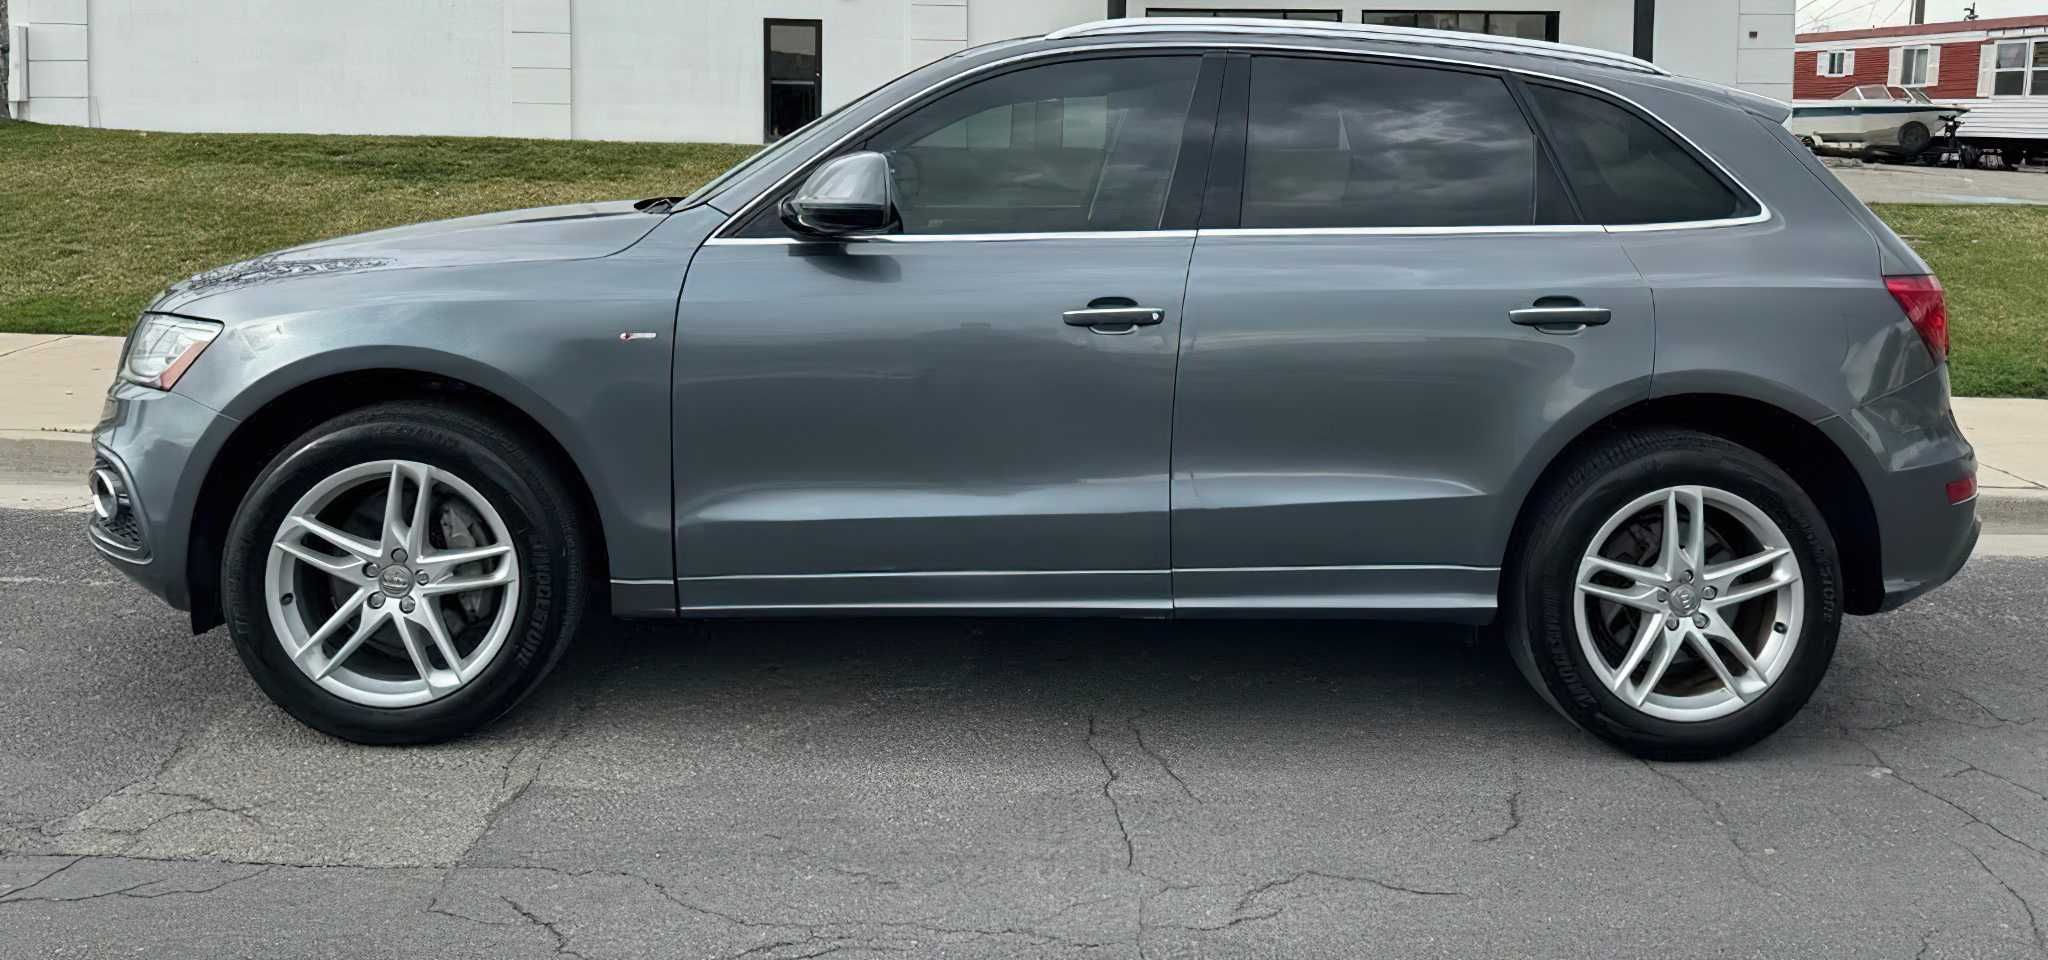 Audi Q5 2016 Gray